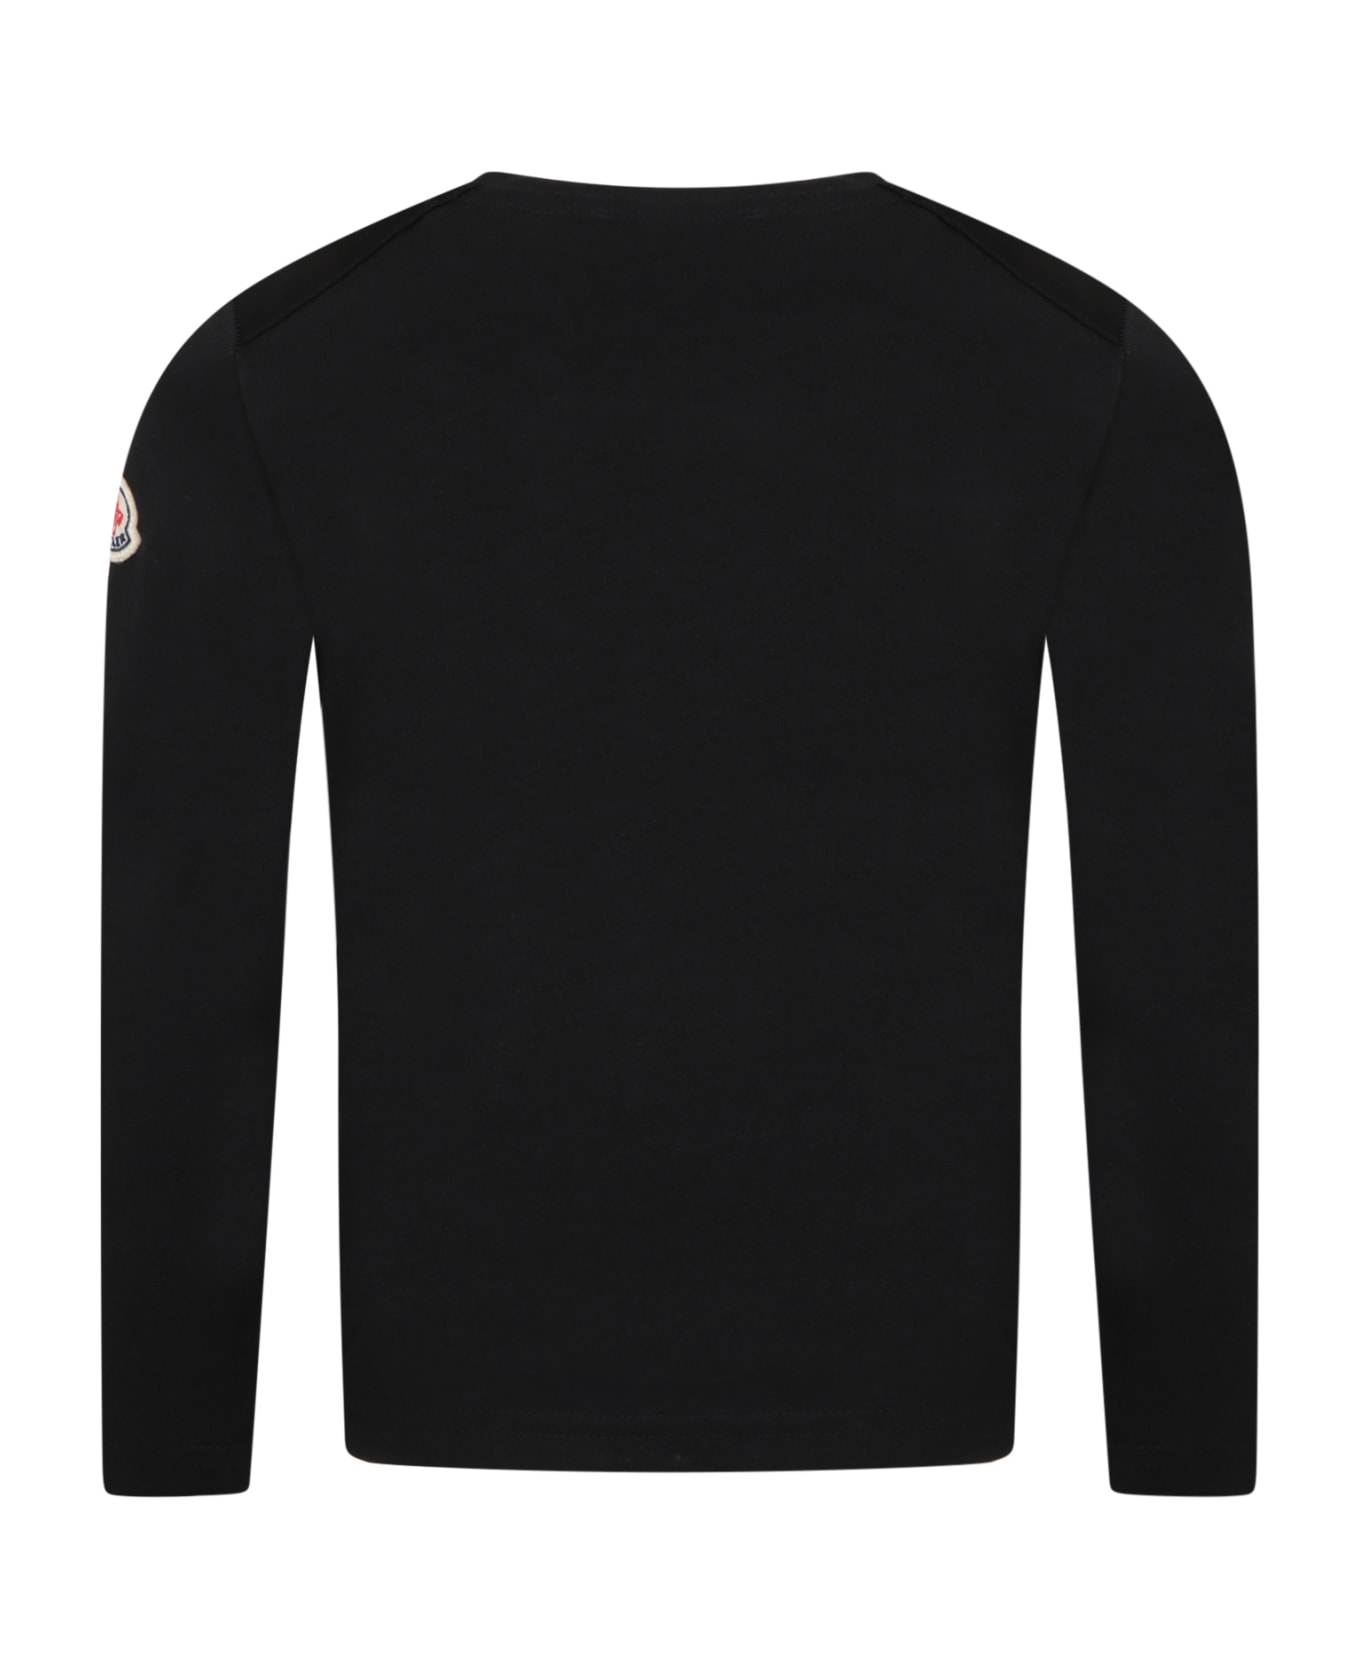 Moncler Black T-shirt For Kids With Logo - BLACK